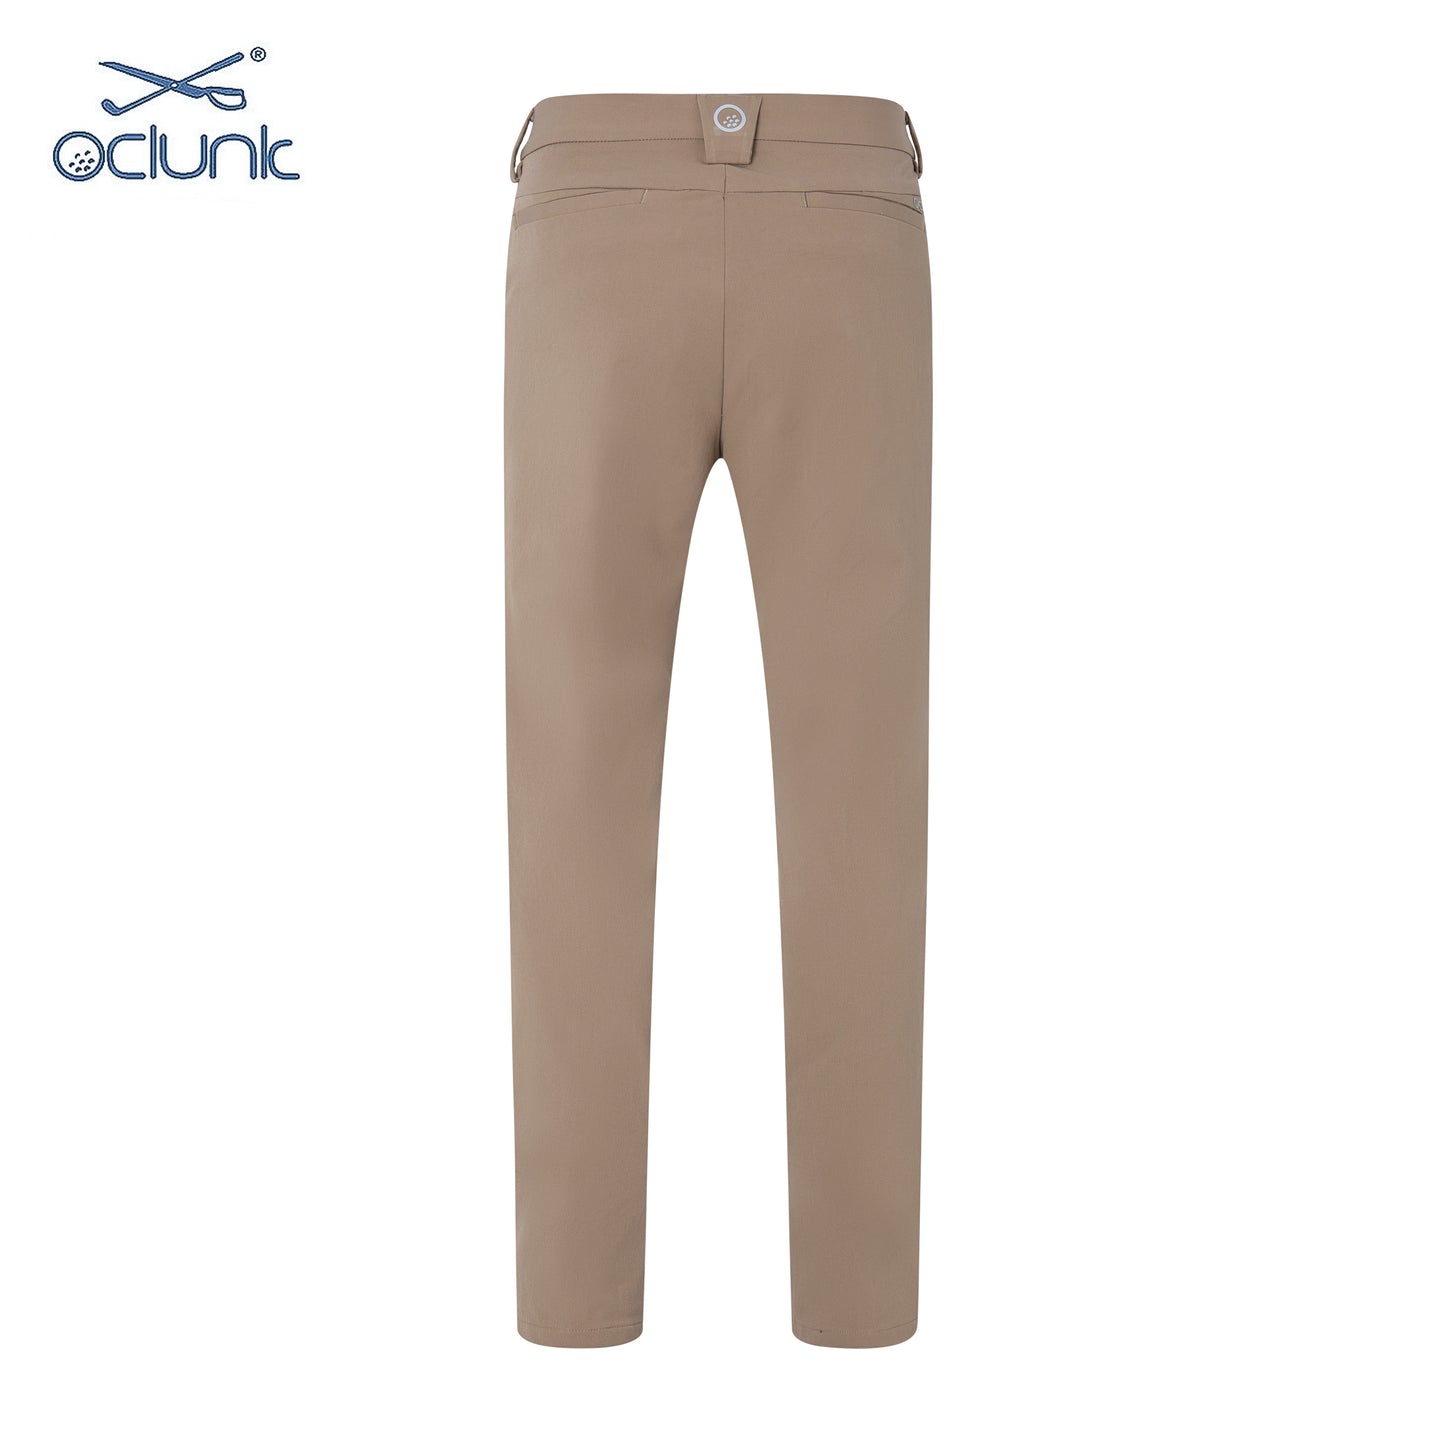 Men's Casual Trend Golf Pants | Oclunlc 2021